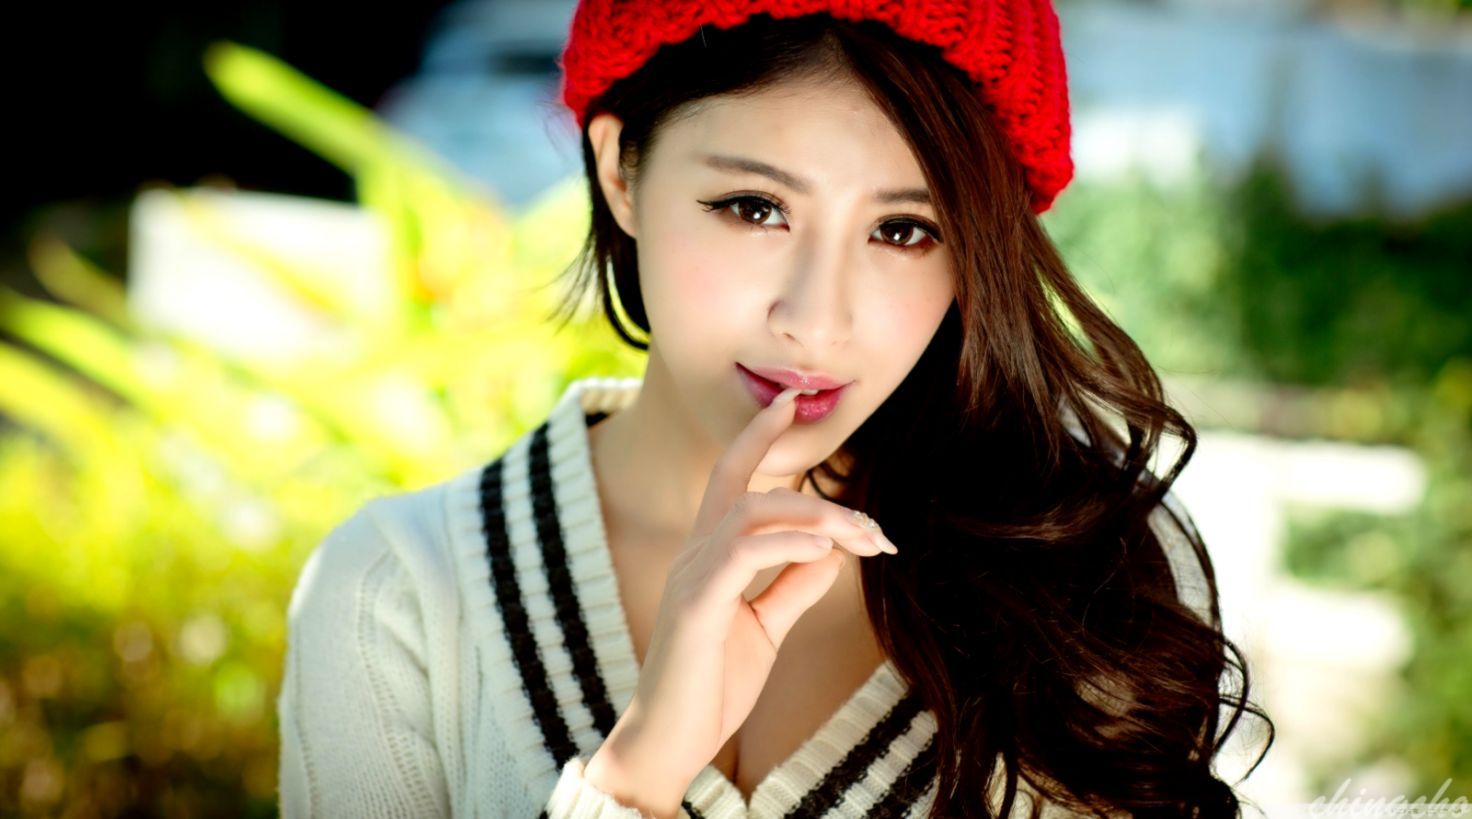 Asian Hot Girl Wallpapers